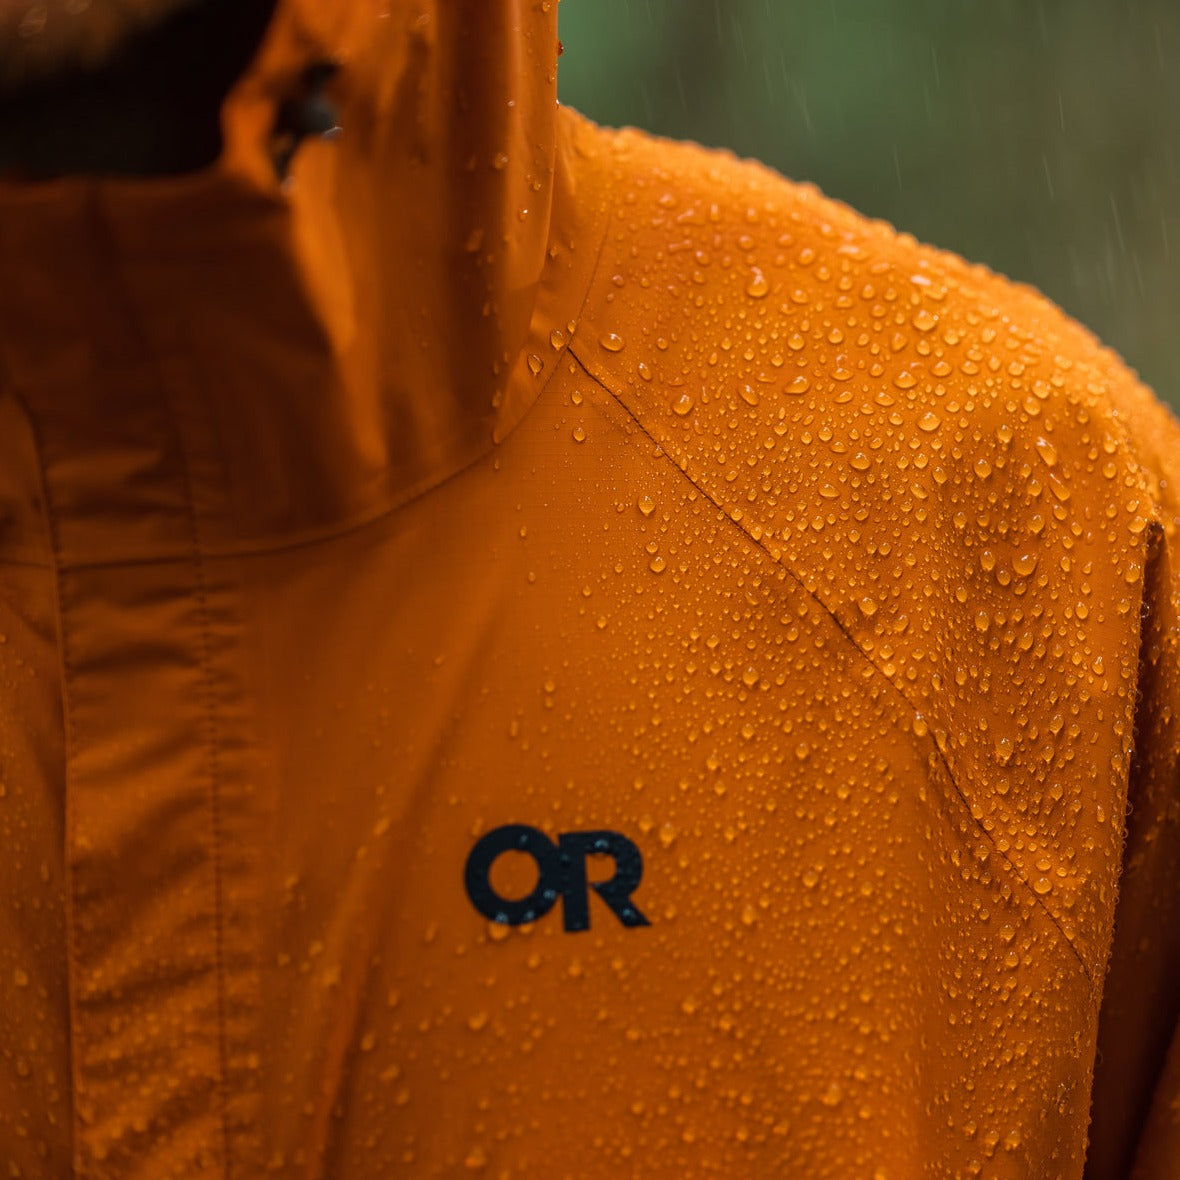 Outdoor Research®男款 Apollo Ventia™ Rain Jacket